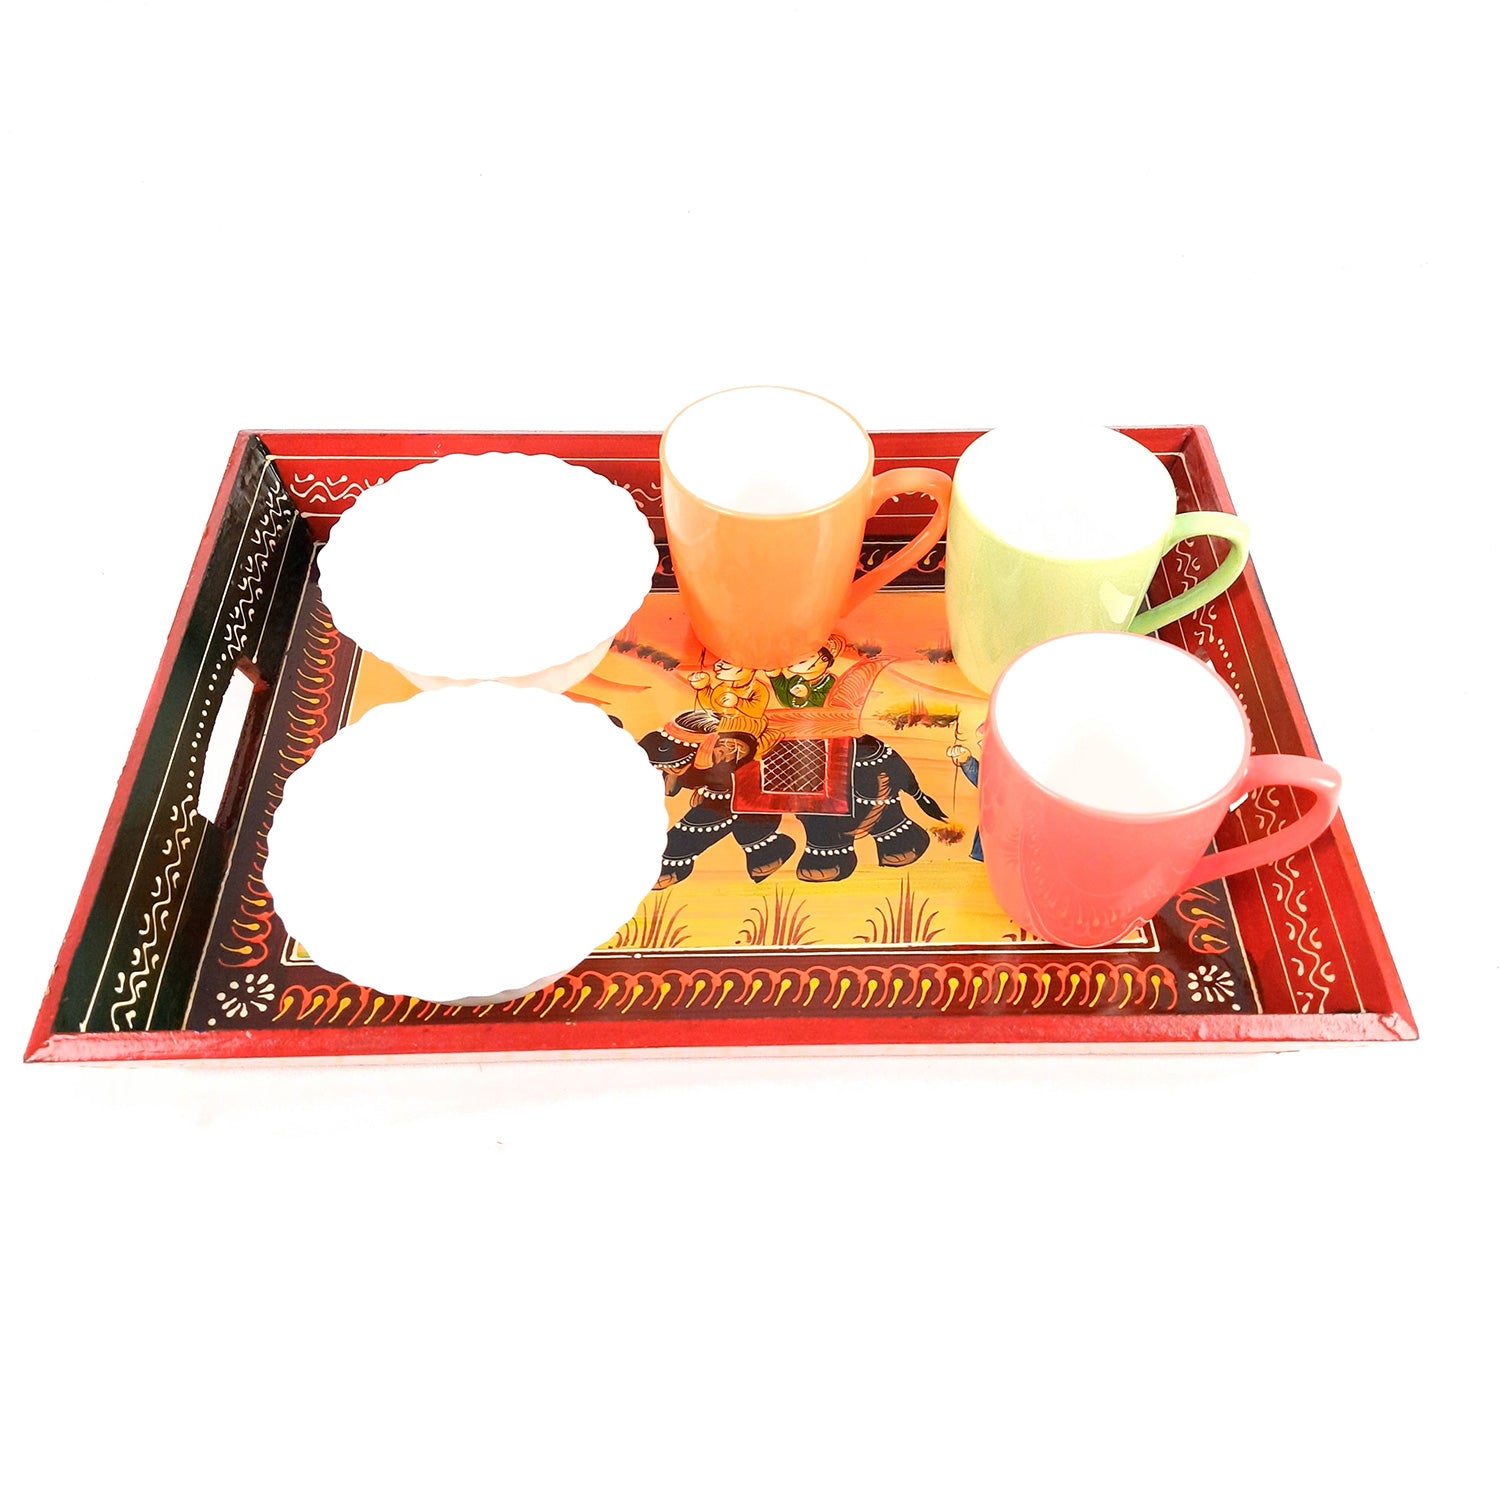 Serving Tray Set | Wooden Tea Tray | Serving Platter - For Dining & Serving, Home, Table, Kitchen Decor - Set of 3 - Apkamart